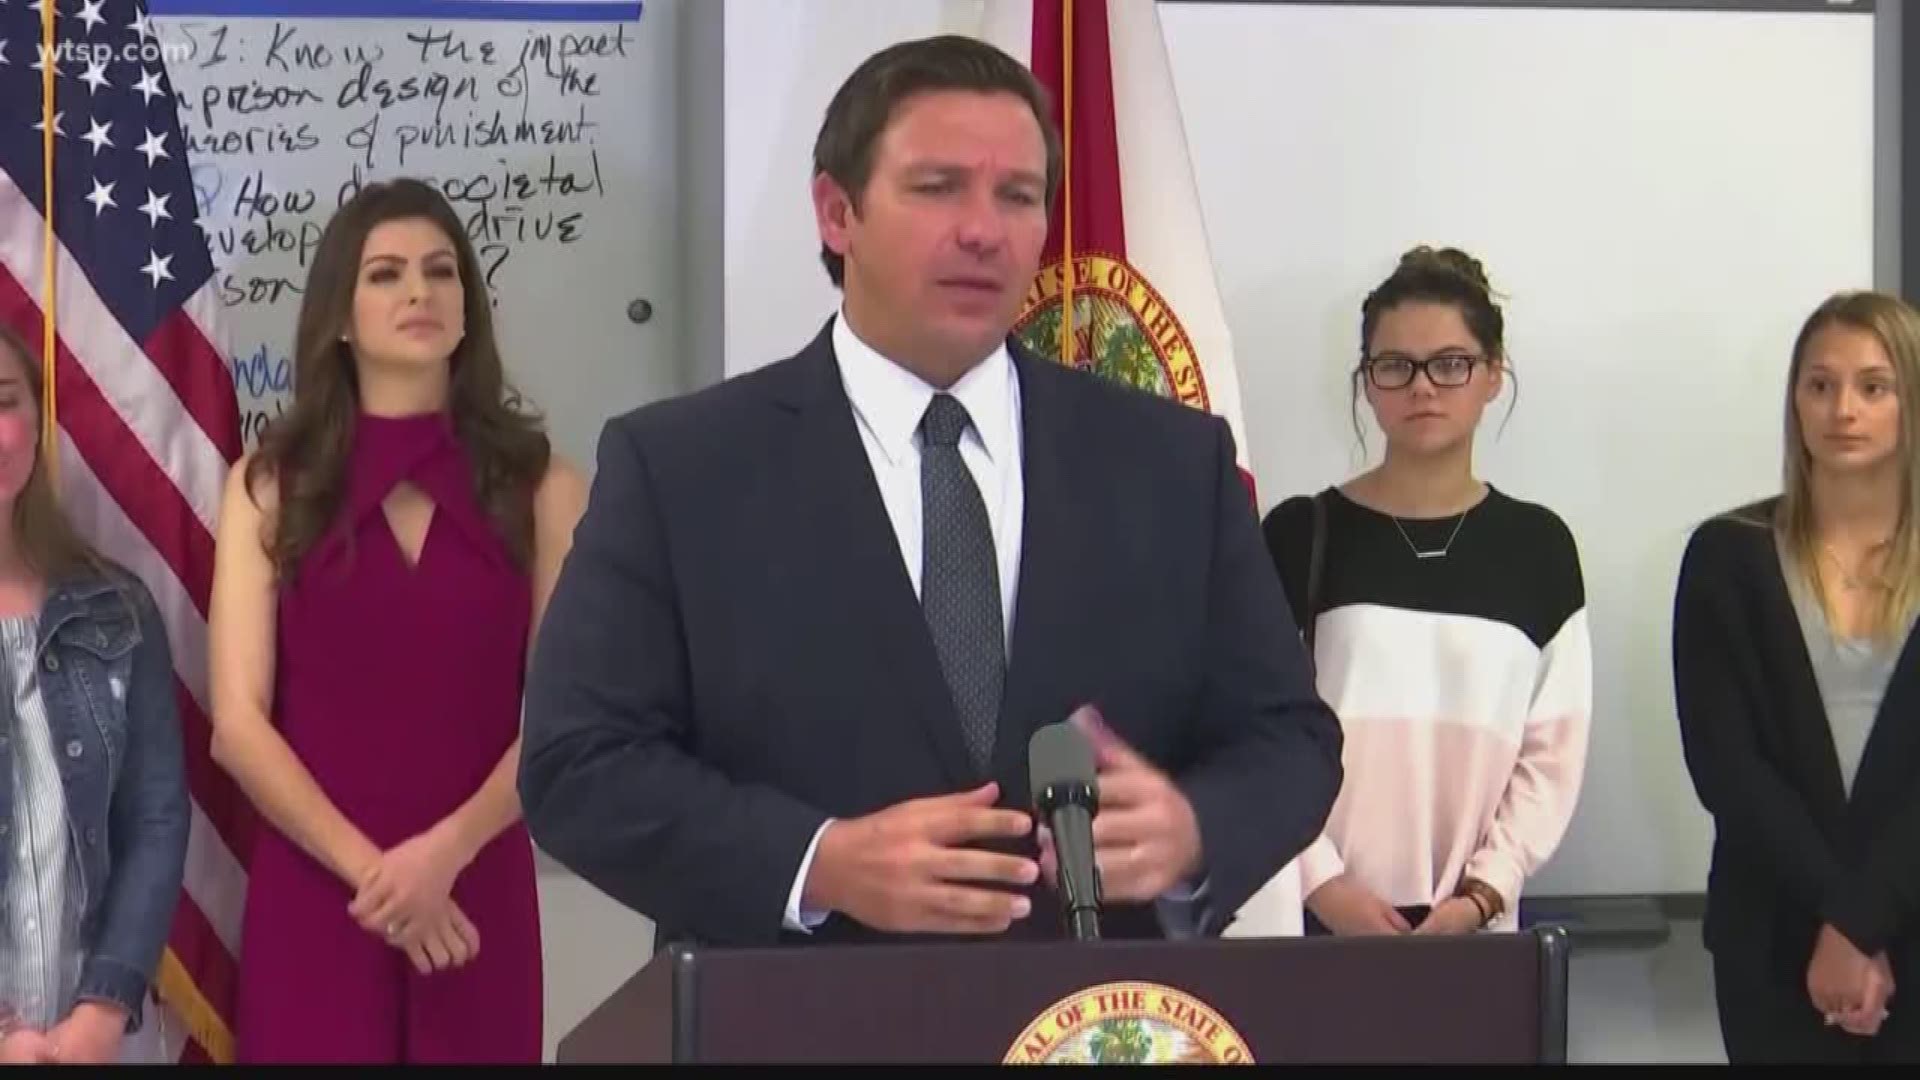 Florida Gov. Ron DeSantis has announced an executive order to eliminate Common Core standards in Florida schools.